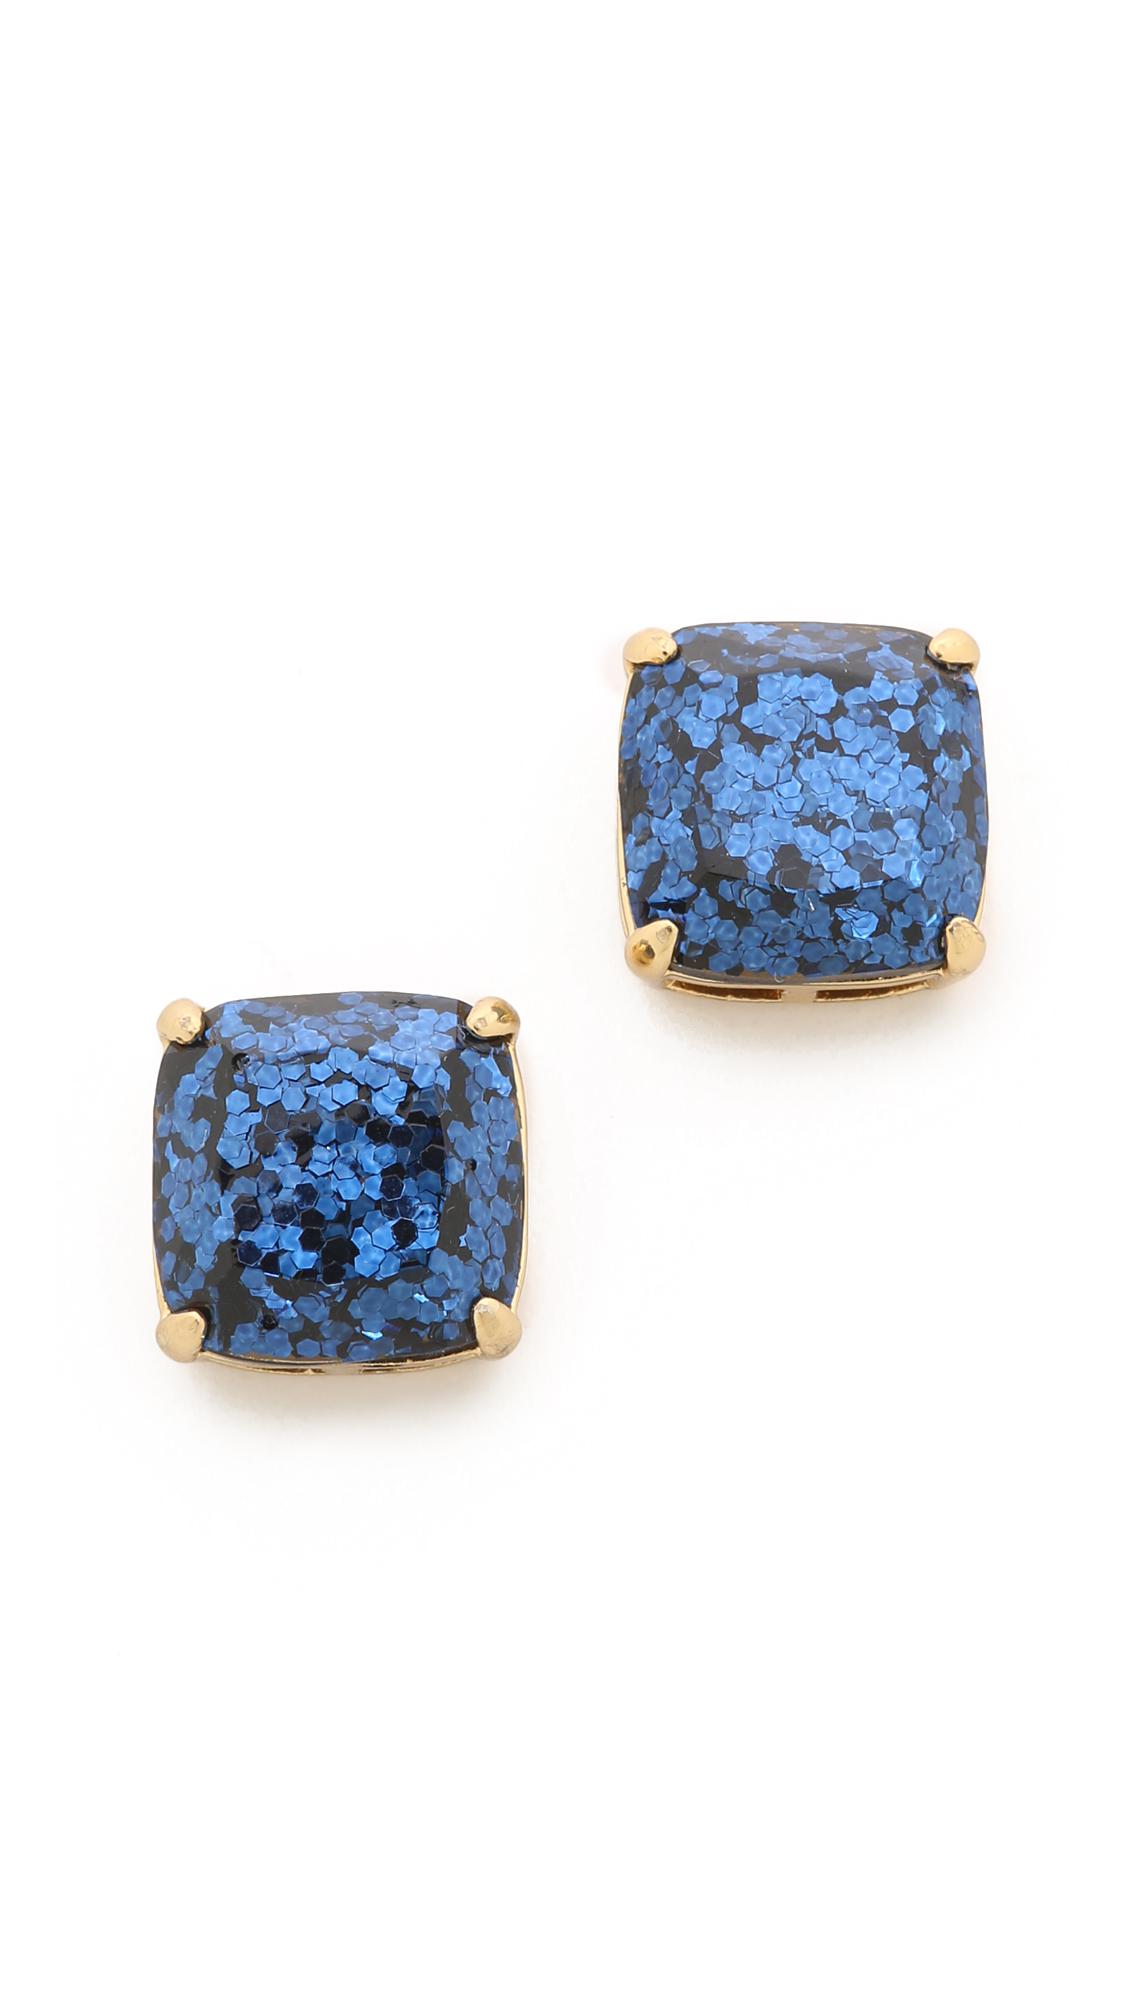 Kate Spade Small Square Stud Earrings - Navy Glitter in Blue | Lyst